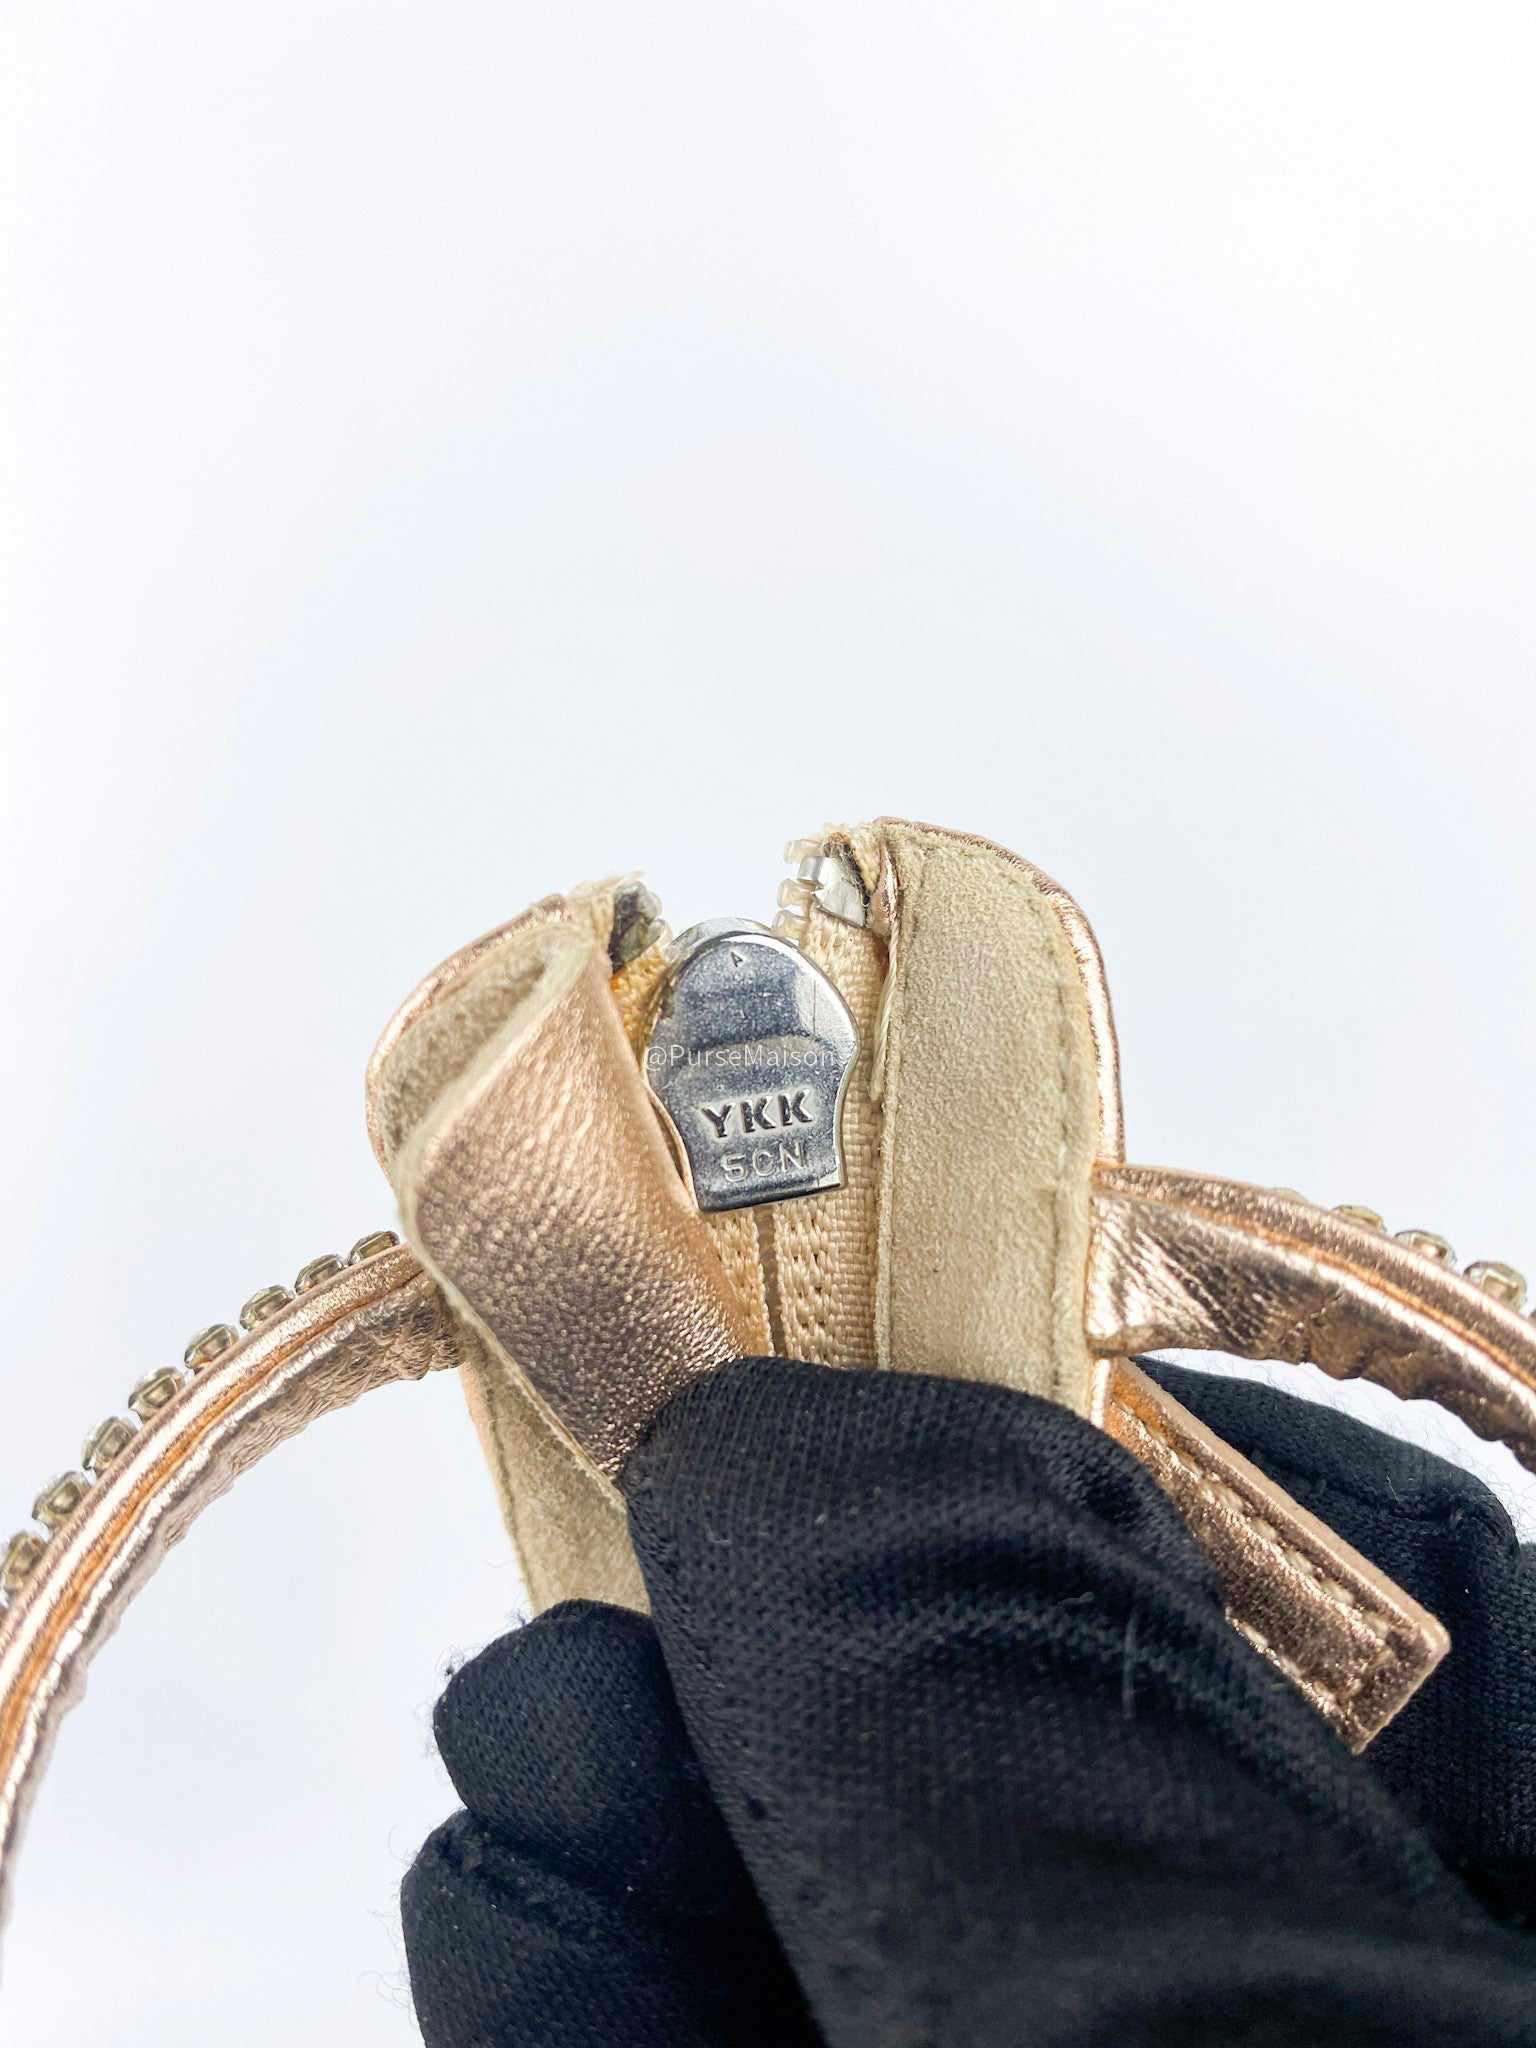 Giuseppe Zanotti Jeweled Three-Strap Metallic Vinyl Sandals Size 37 EUR (23cm)